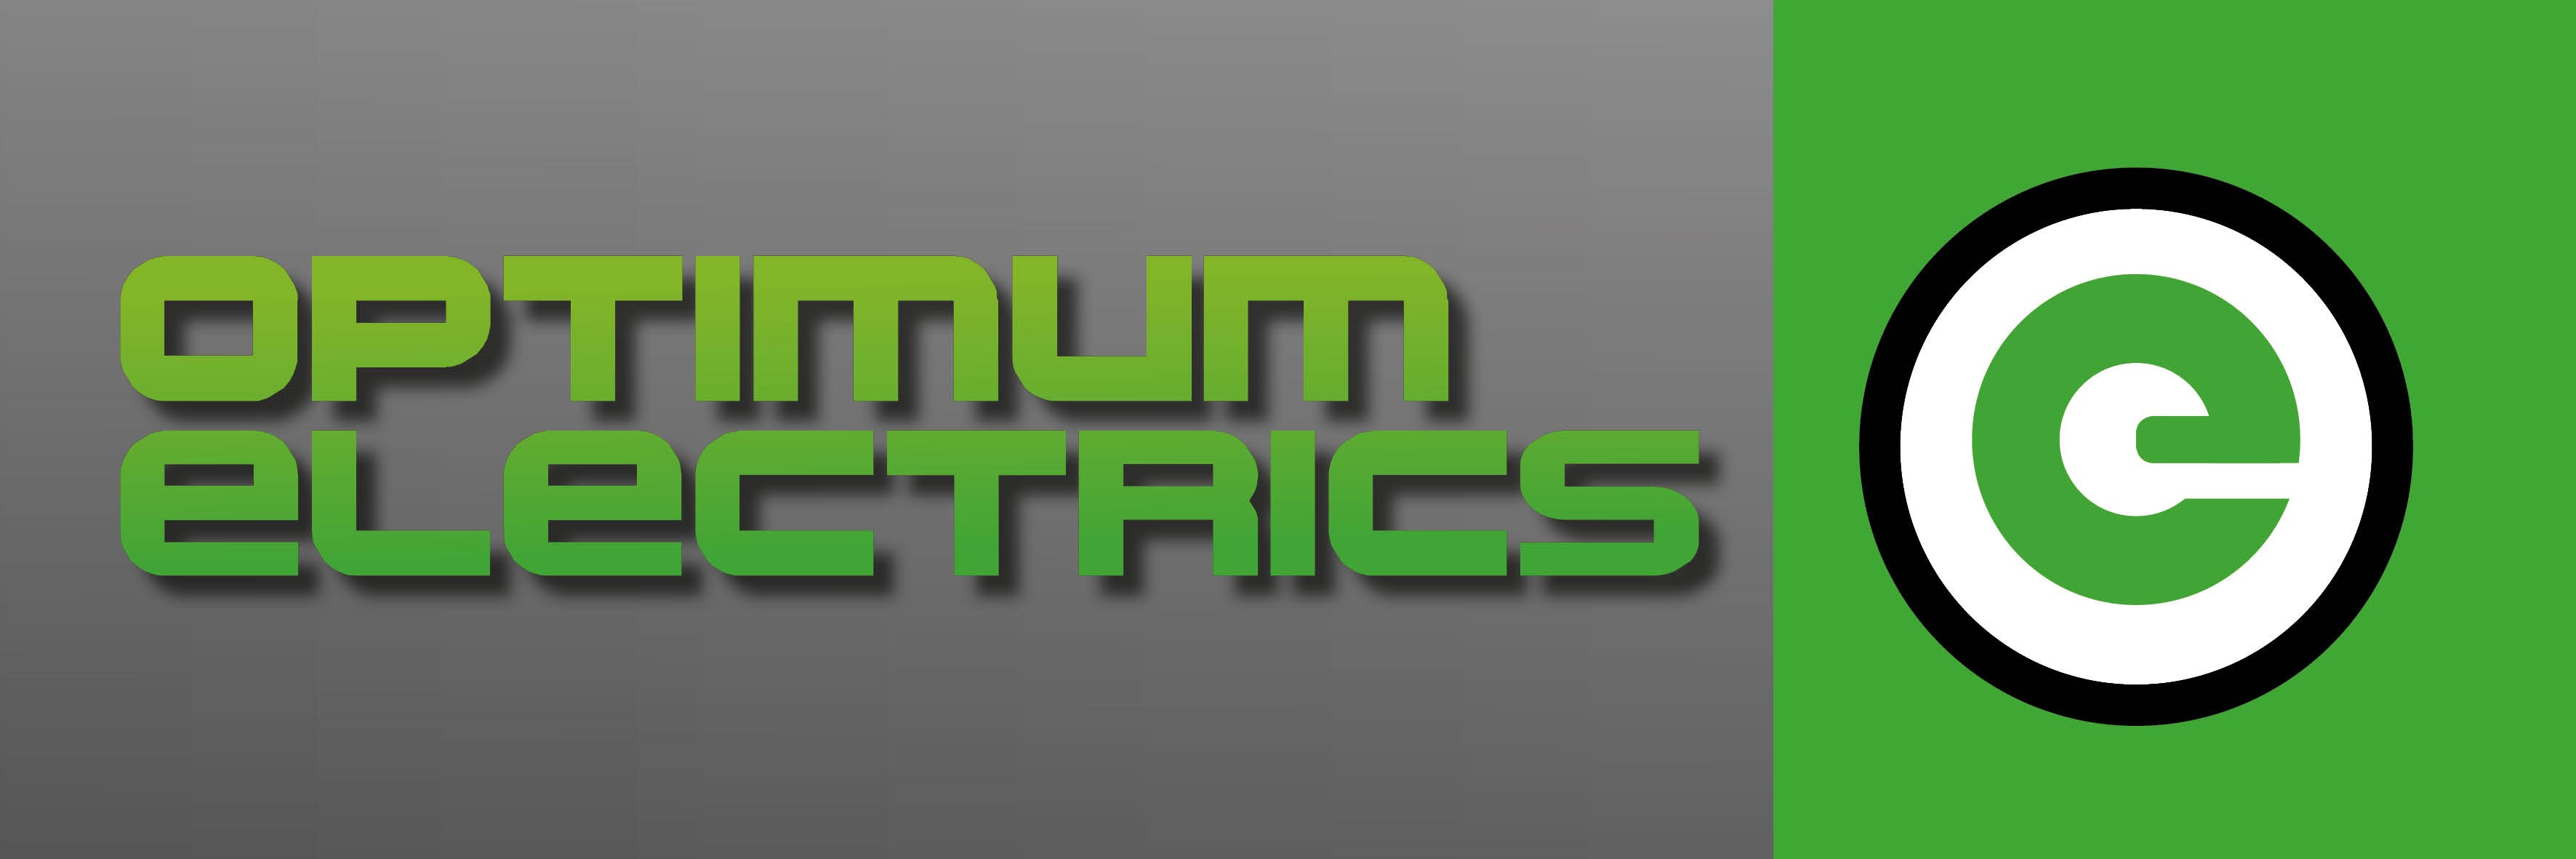 Optimum Electrics logos